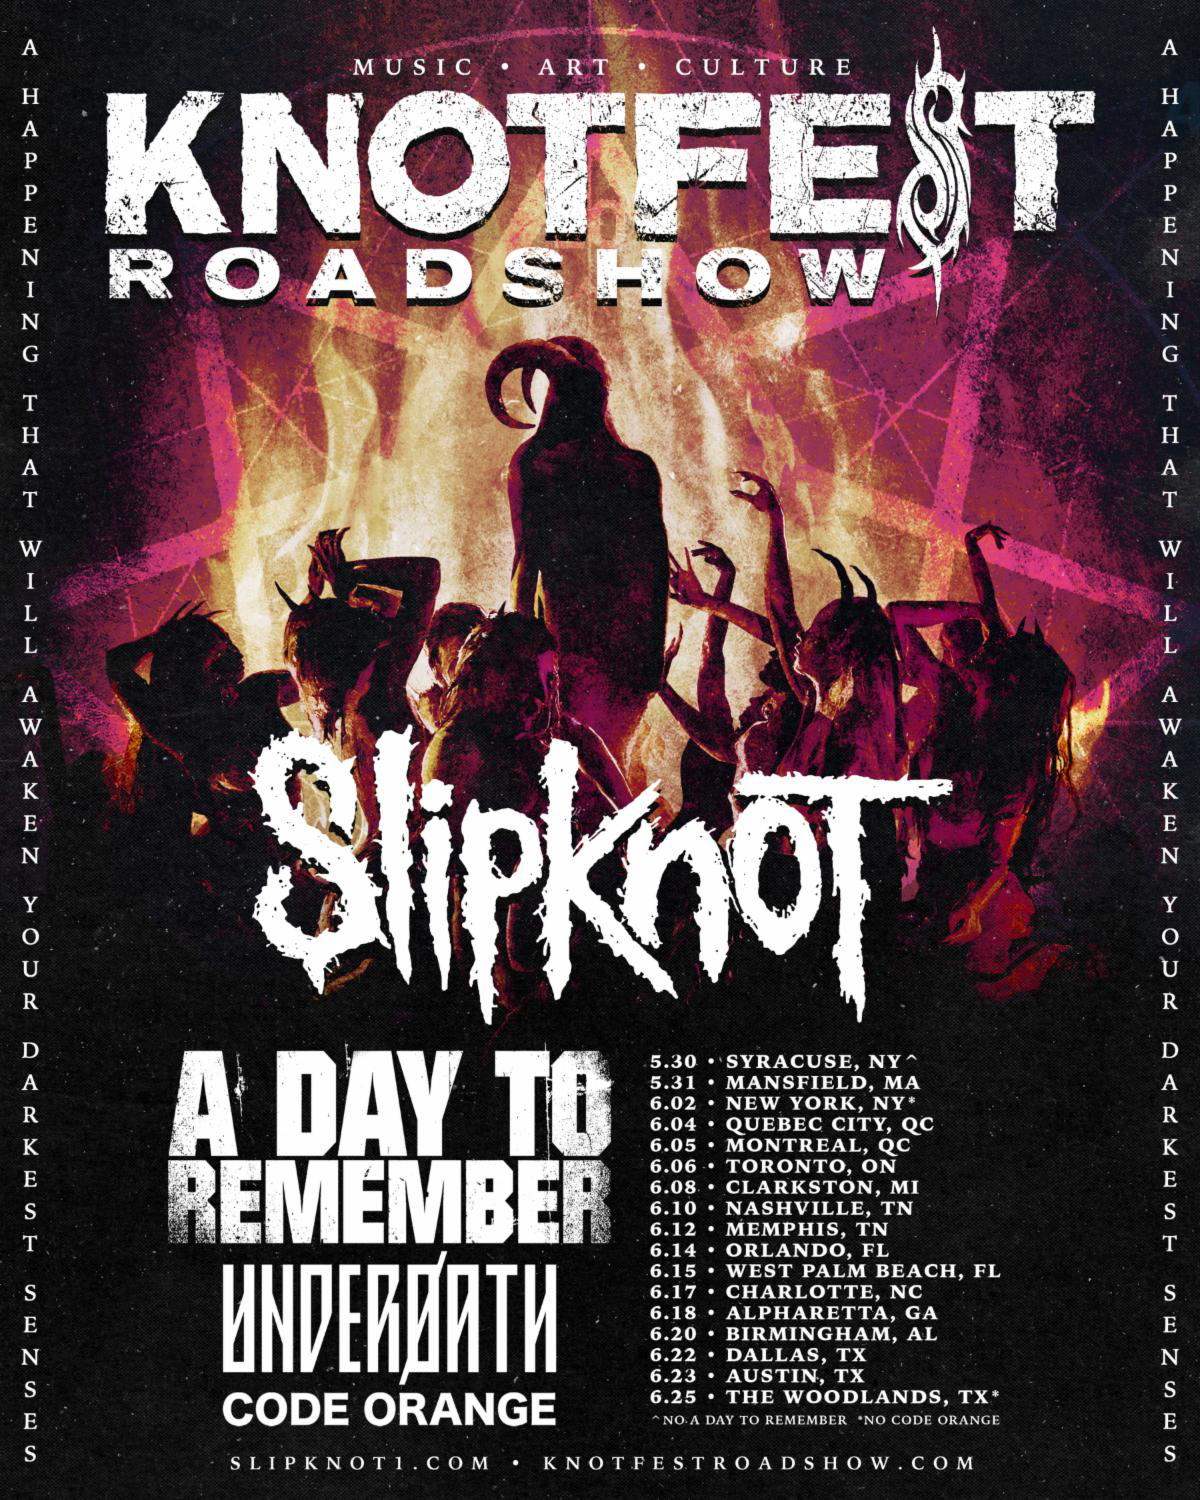 Knotfest Roadshow tour poster